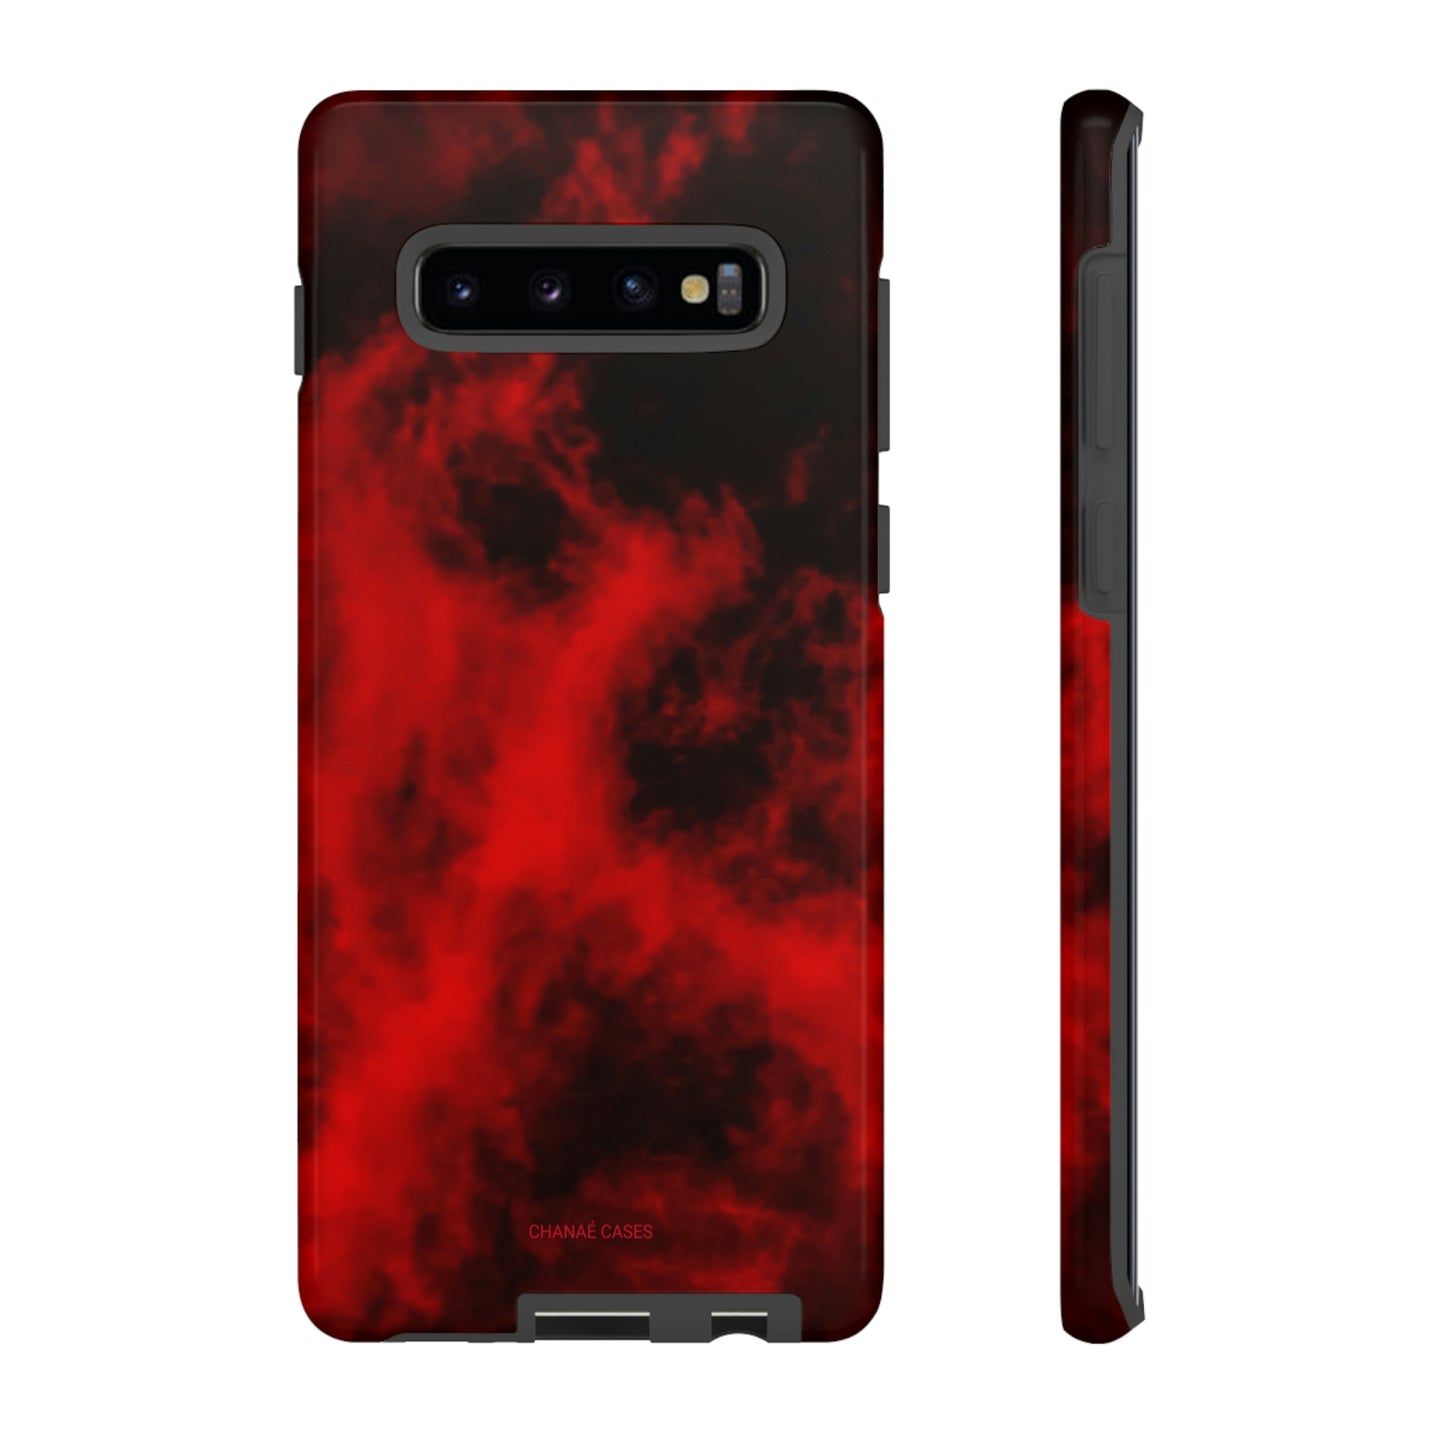 Fury Samsung "Tough" Case (Red/Black)